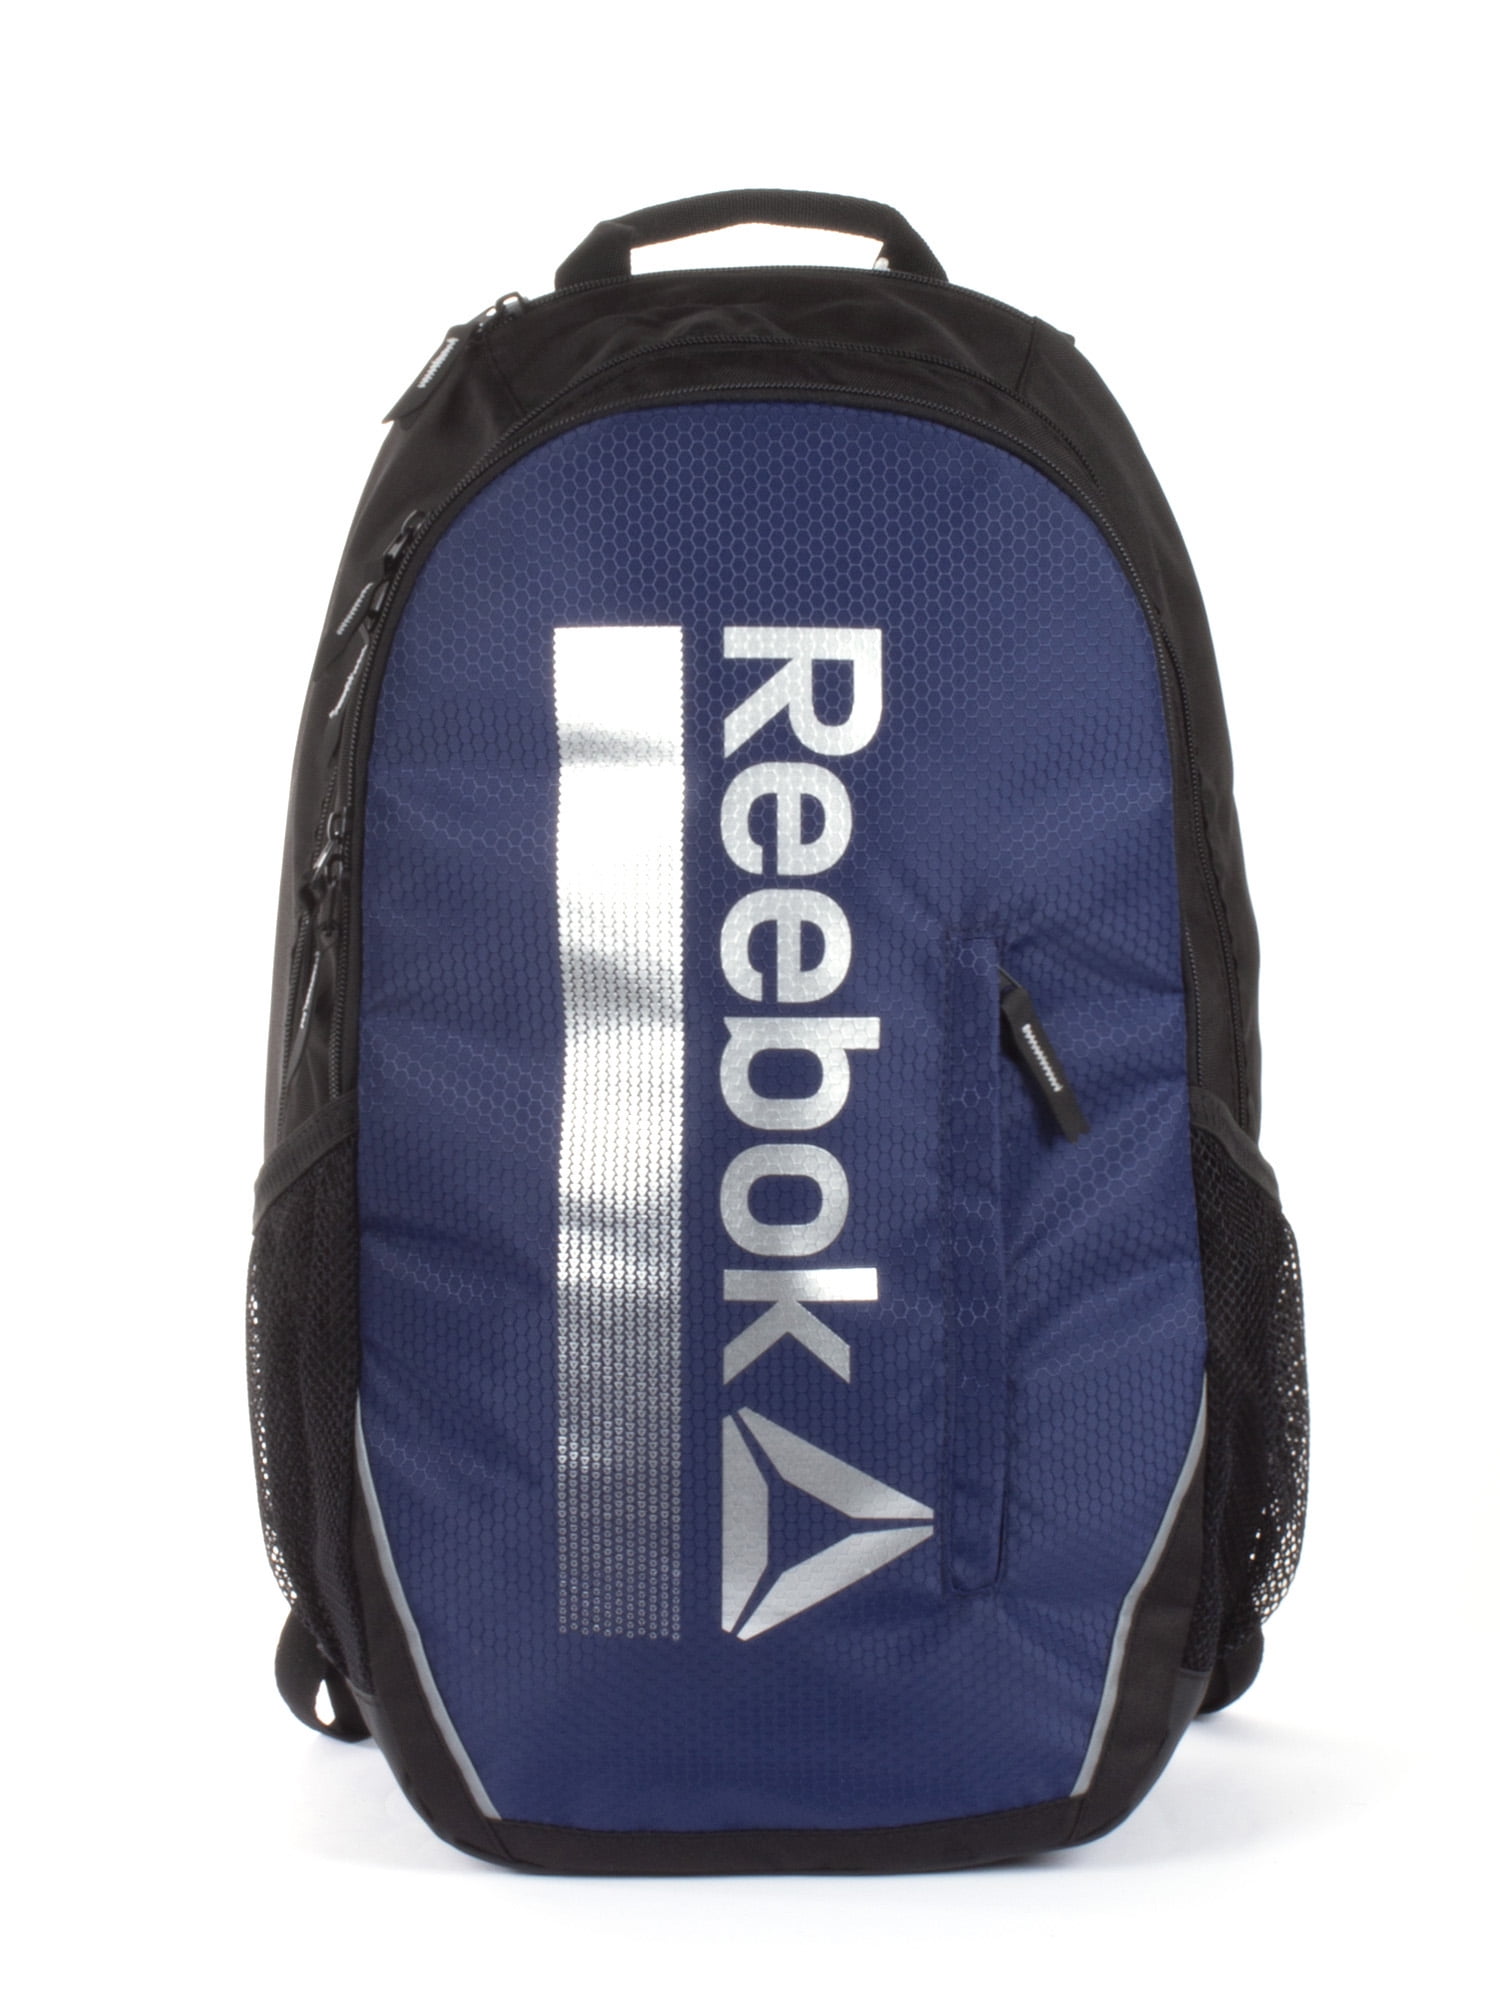 Reebok Trainer Black Backpack -